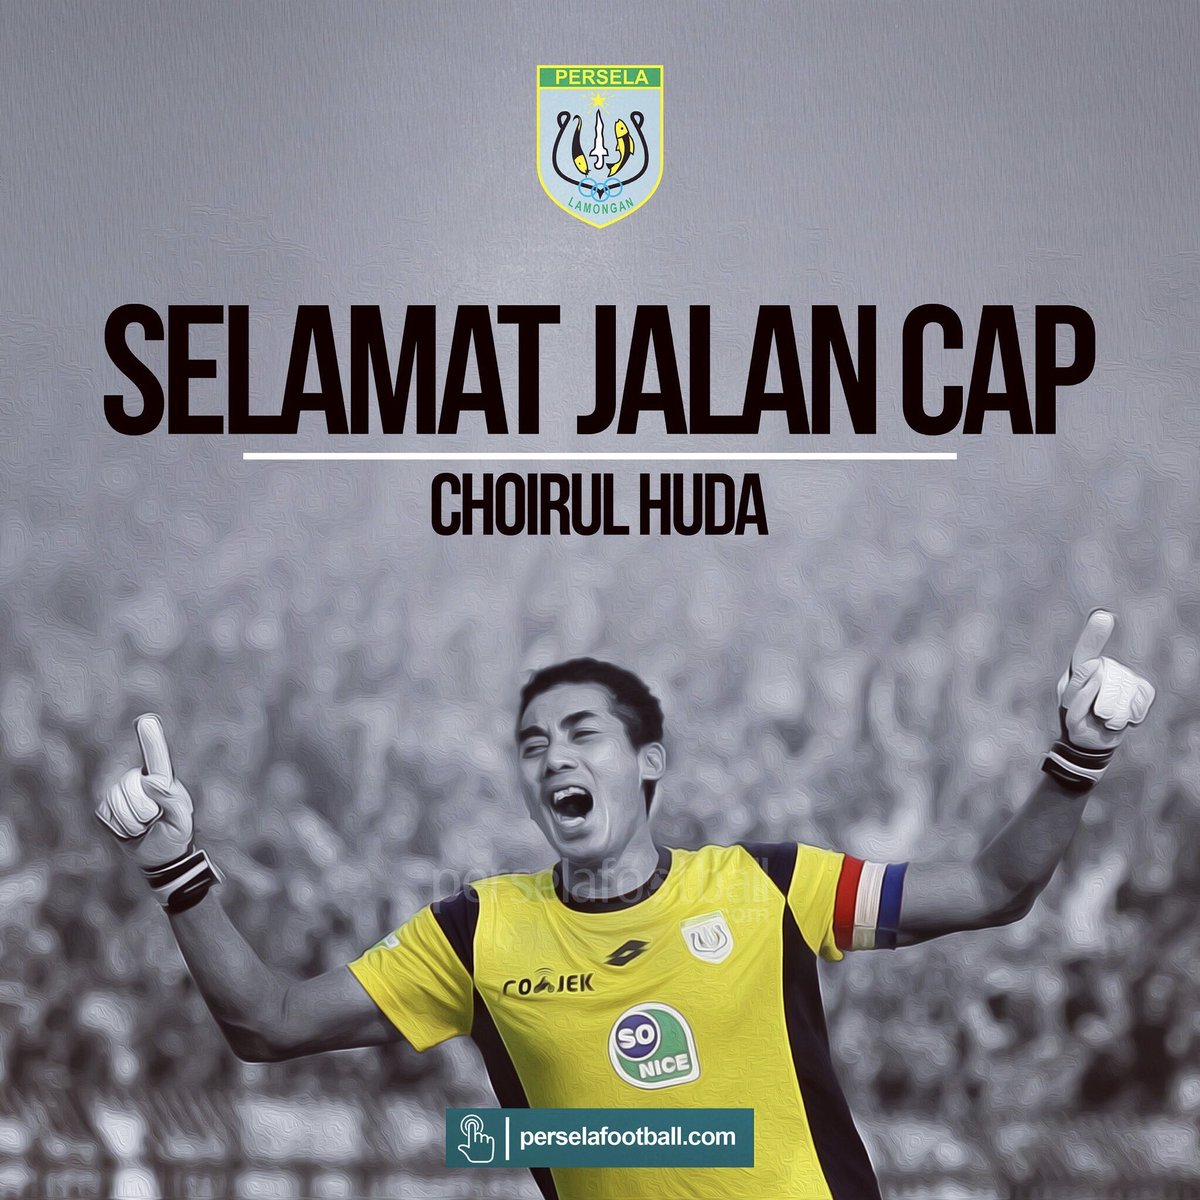 Very sad news from Indonesia R.I.P. Choirul Huda #goalkeepersunion